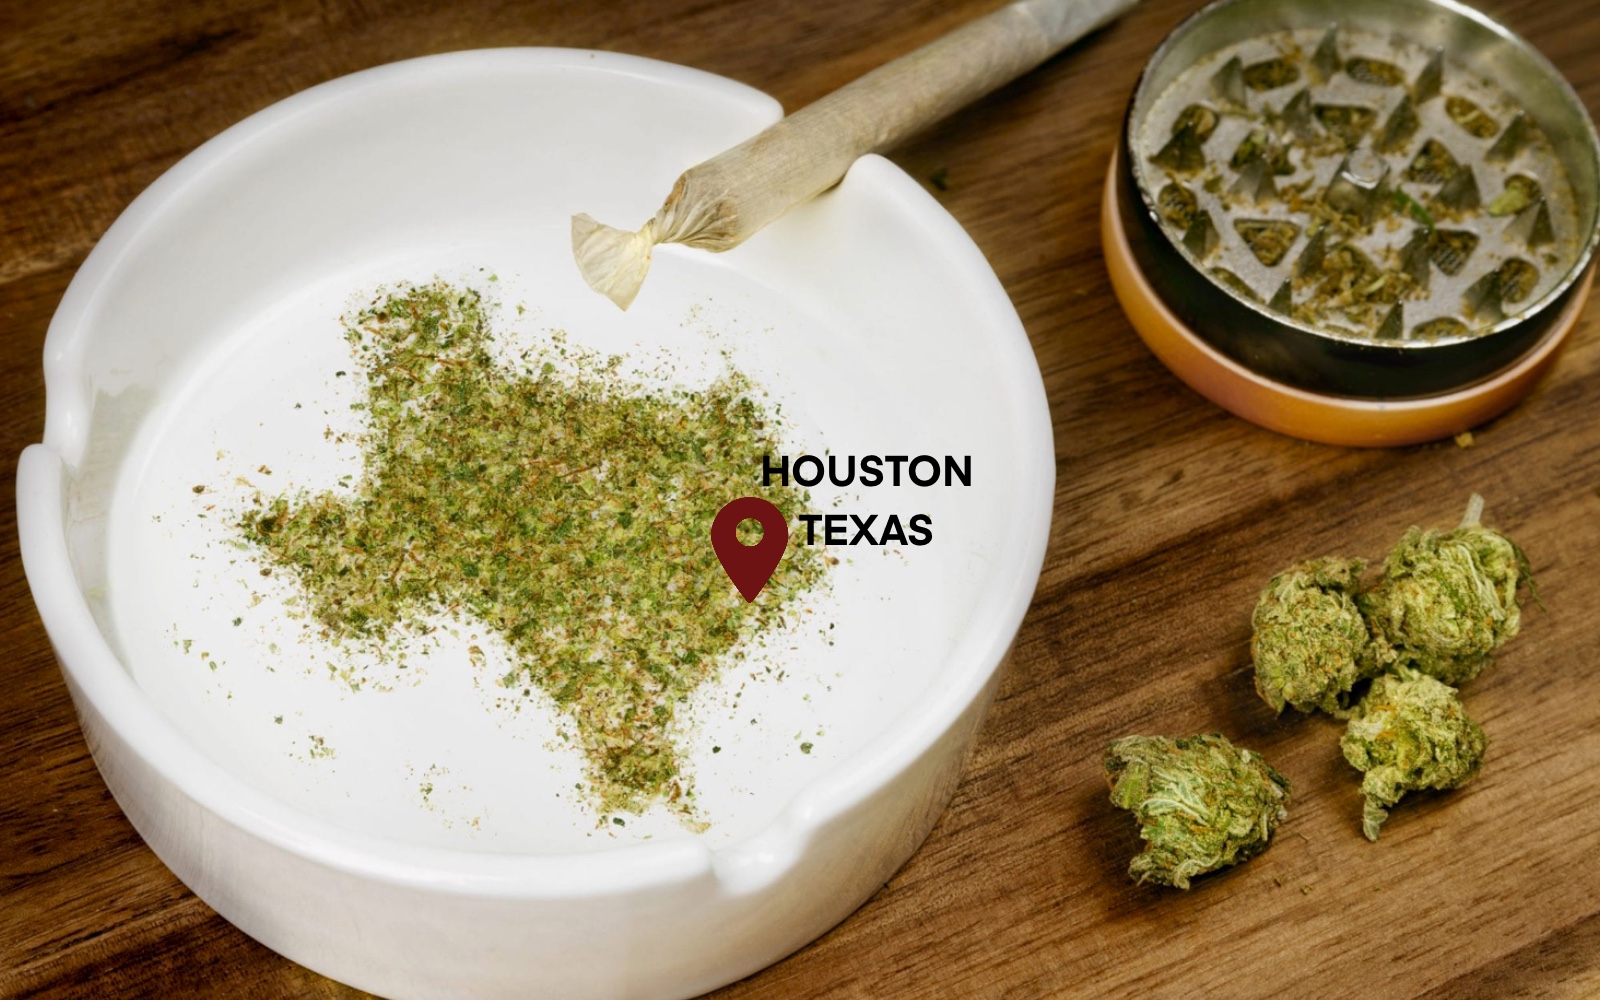 Houston Texas announces plan to decriminalize cannabis